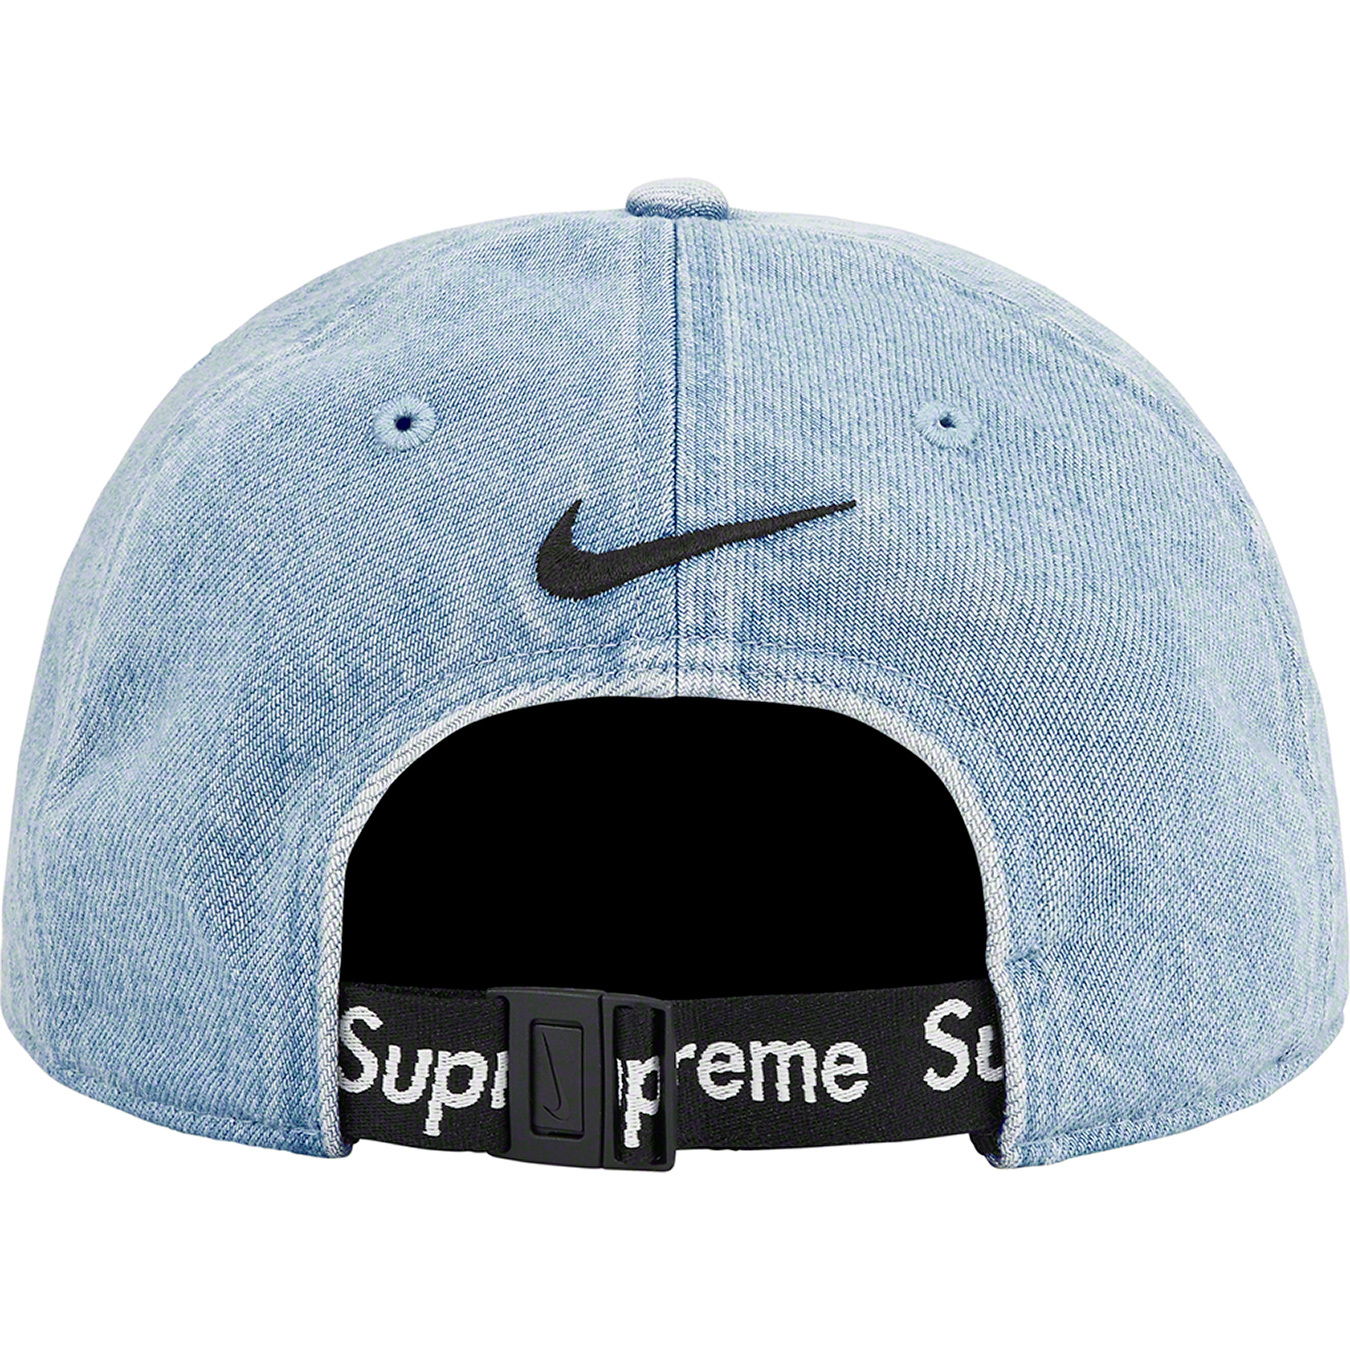 Supreme X Nike Jacquard Logos Beanie In Blue